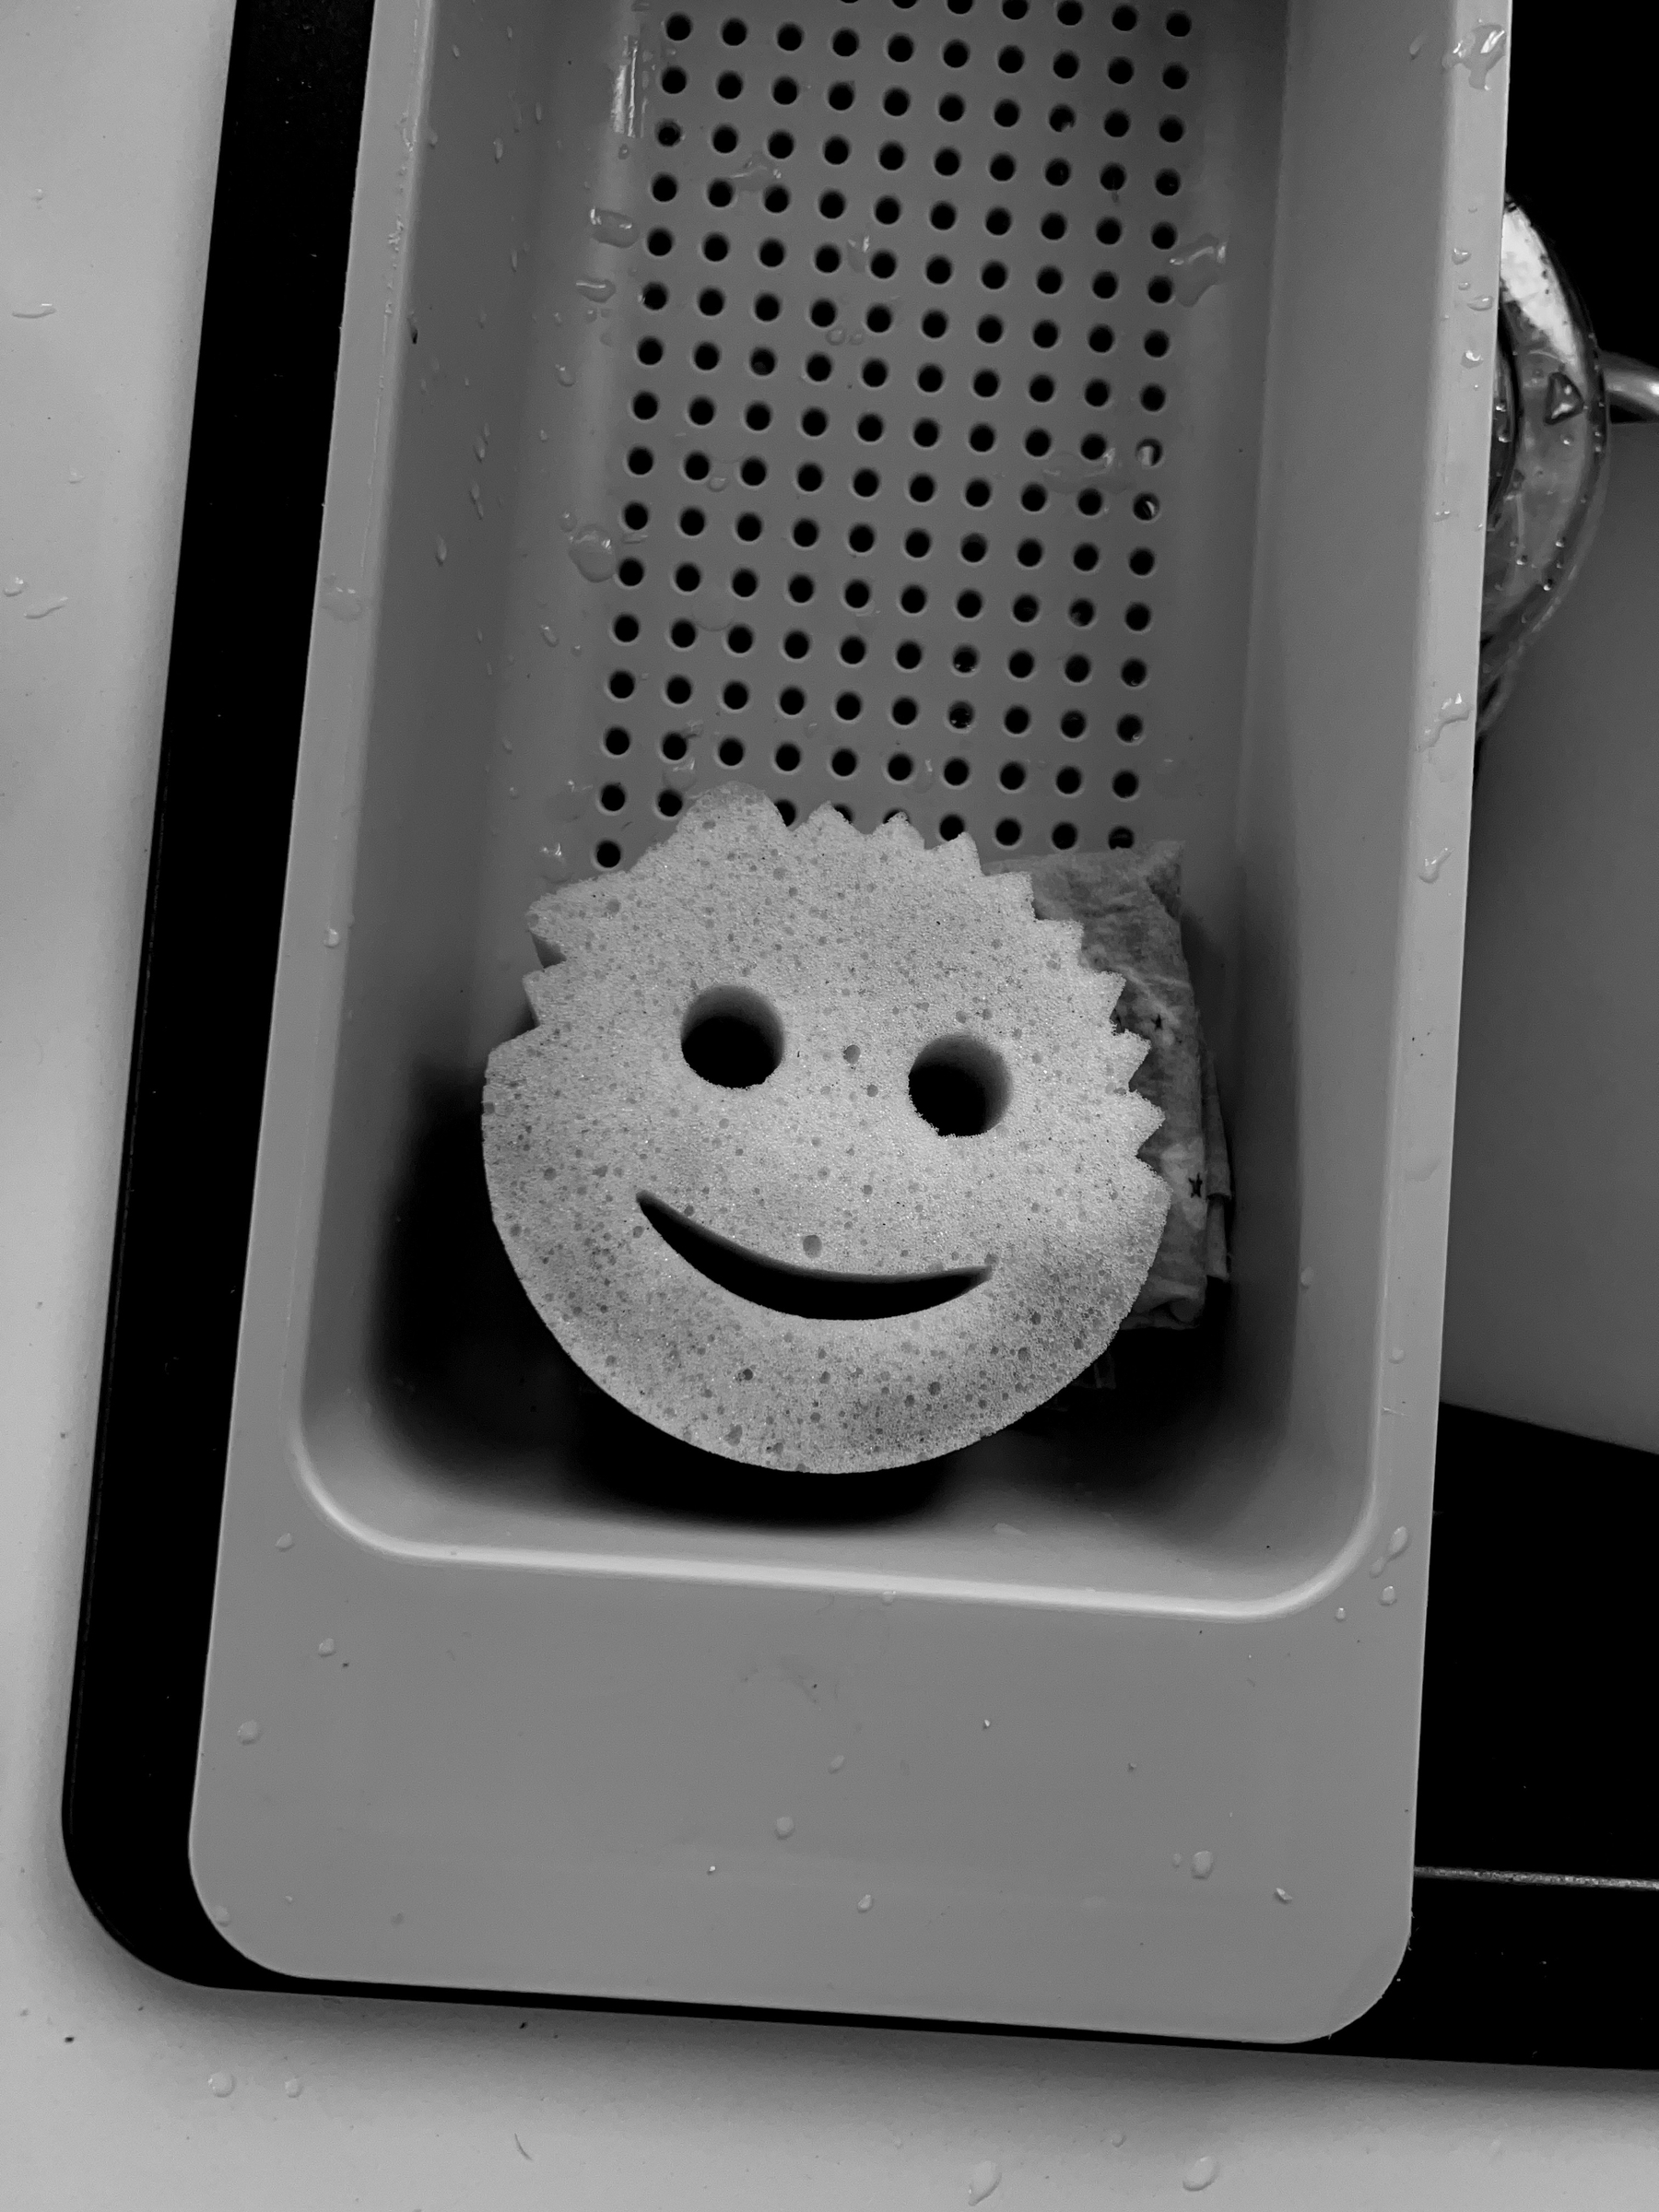 A sponge that looks like a face. 